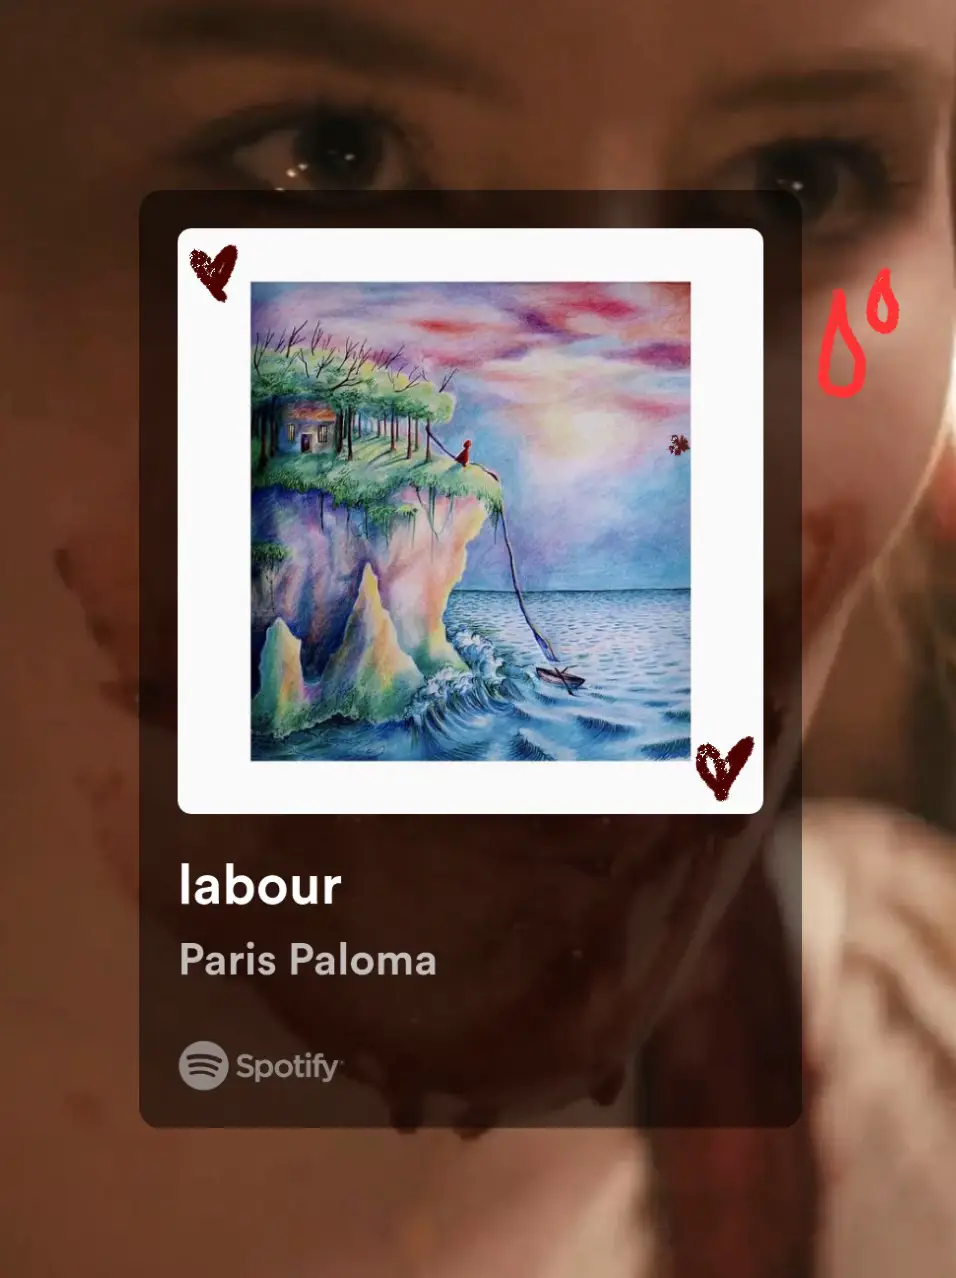  A Spotify playlist of music by Paris Paloma.